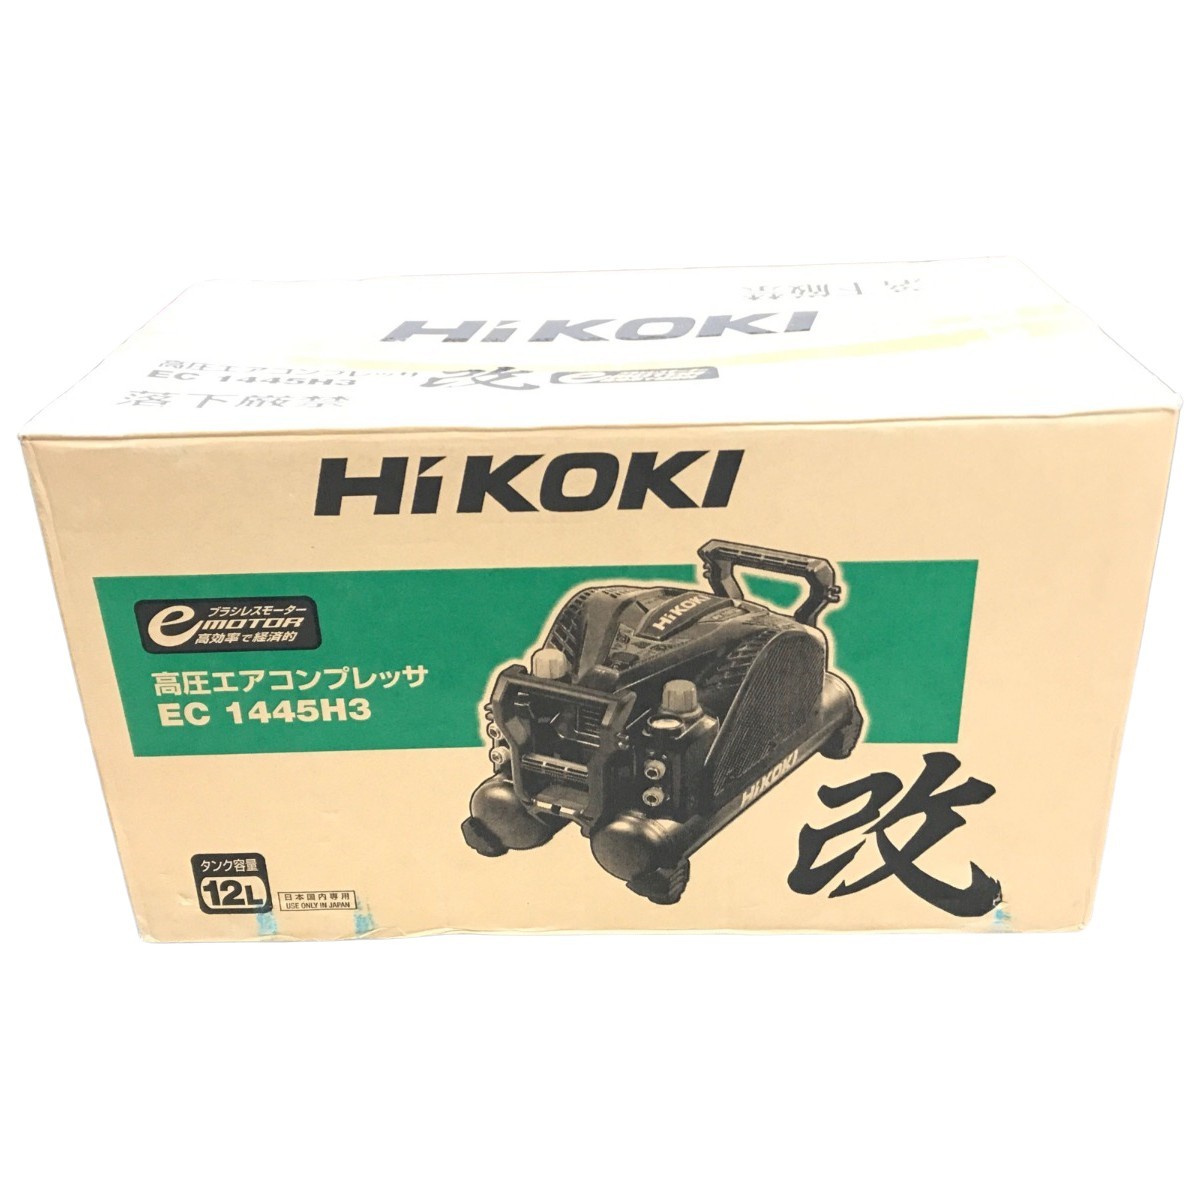 ▼▼ HiKOKI ハイコーキ 高圧エアコンプレッサ EC1445H3 未使用に近い